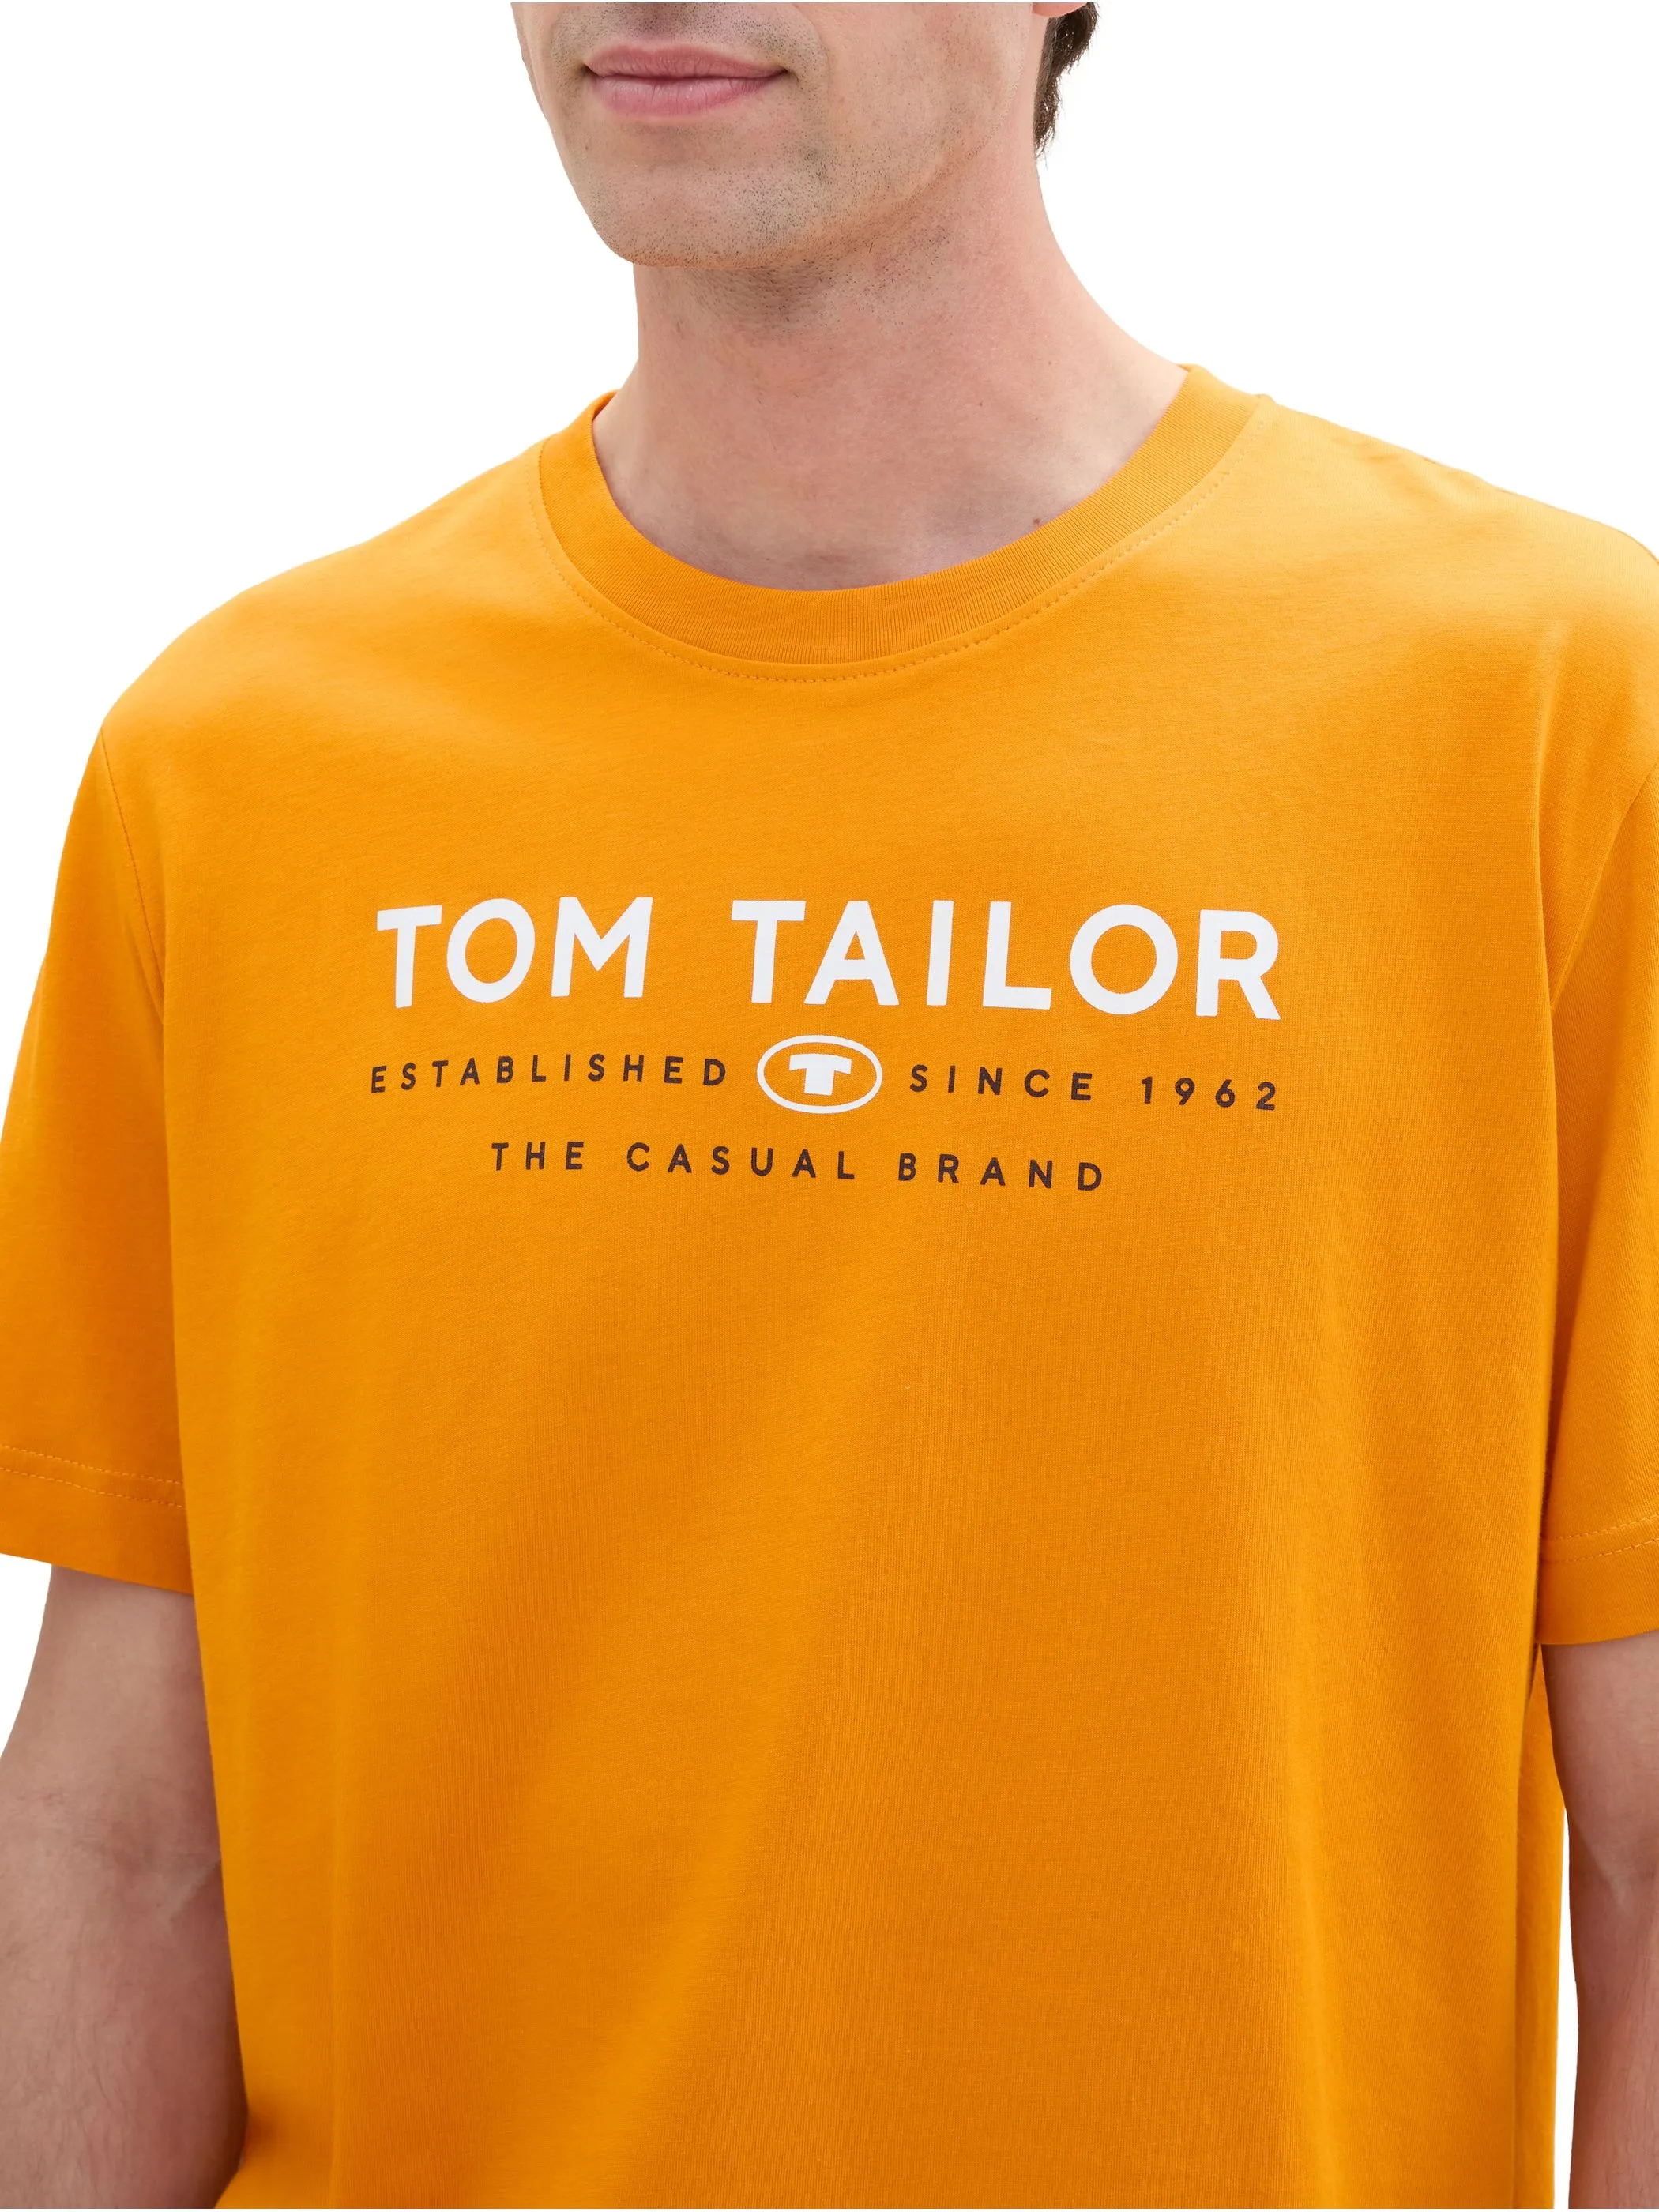 Tom Tailor 1043276 t-shirt with print Orange 898849 12392 3